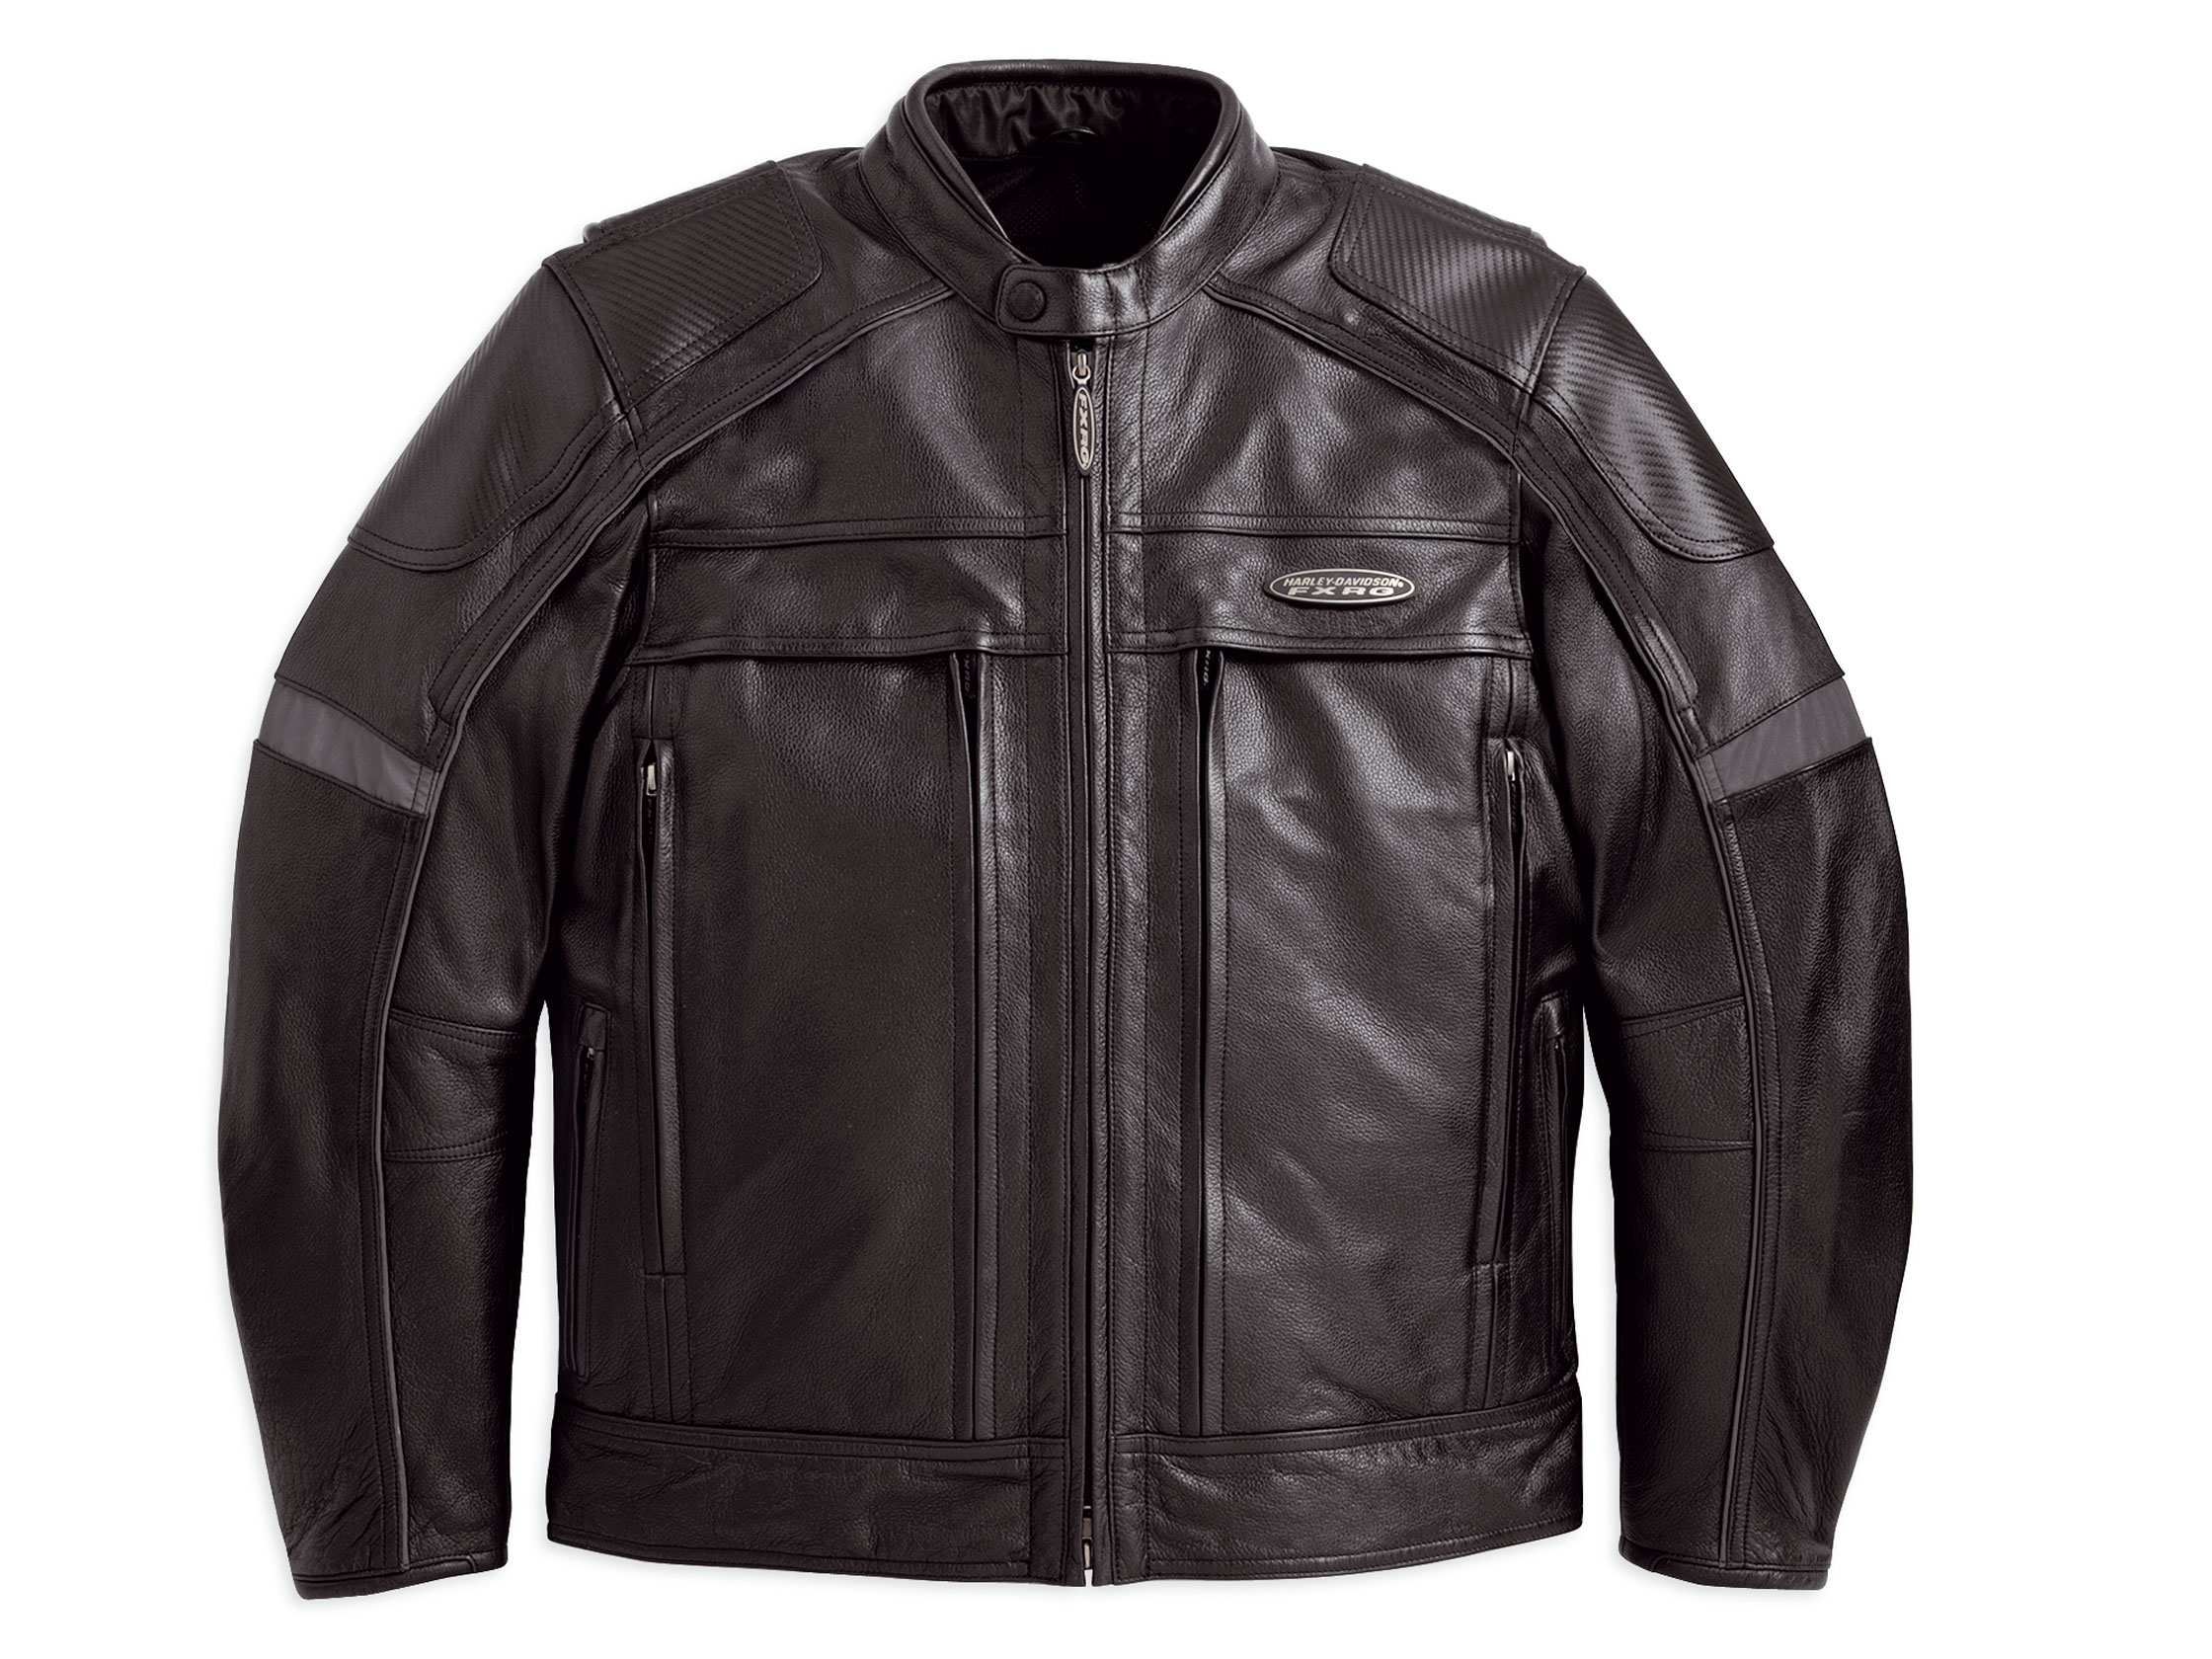 Harley Davidson FXRG Motorcycle Leather Jacket Mens Large Chest 42-45 Black